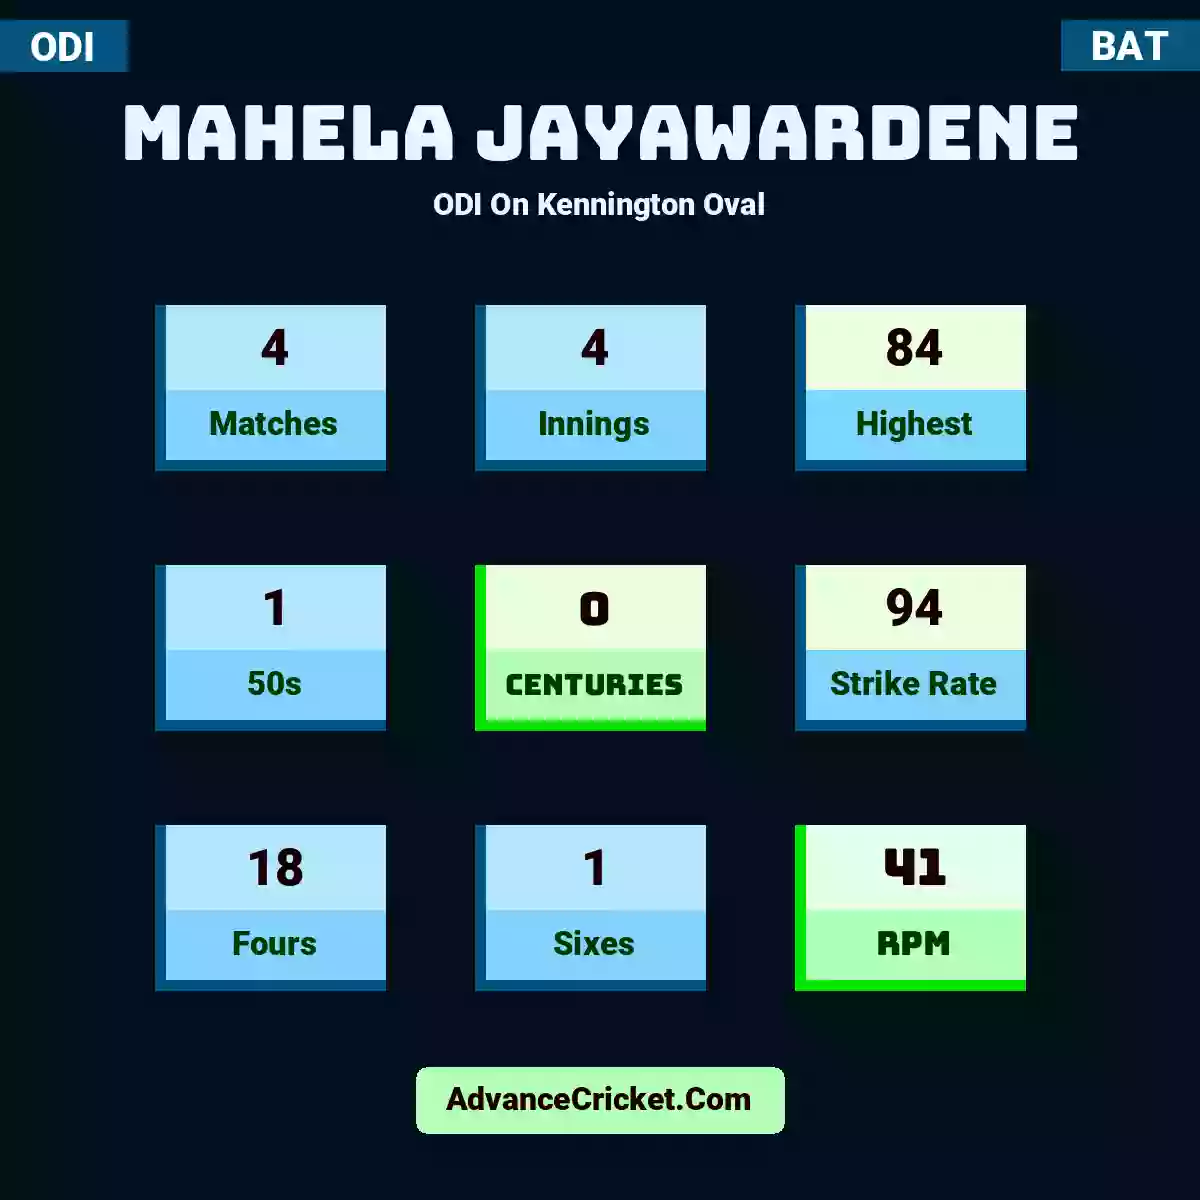 Mahela Jayawardene ODI  On Kennington Oval, Mahela Jayawardene played 4 matches, scored 84 runs as highest, 1 half-centuries, and 0 centuries, with a strike rate of 94. M.Jayawardene hit 18 fours and 1 sixes, with an RPM of 41.